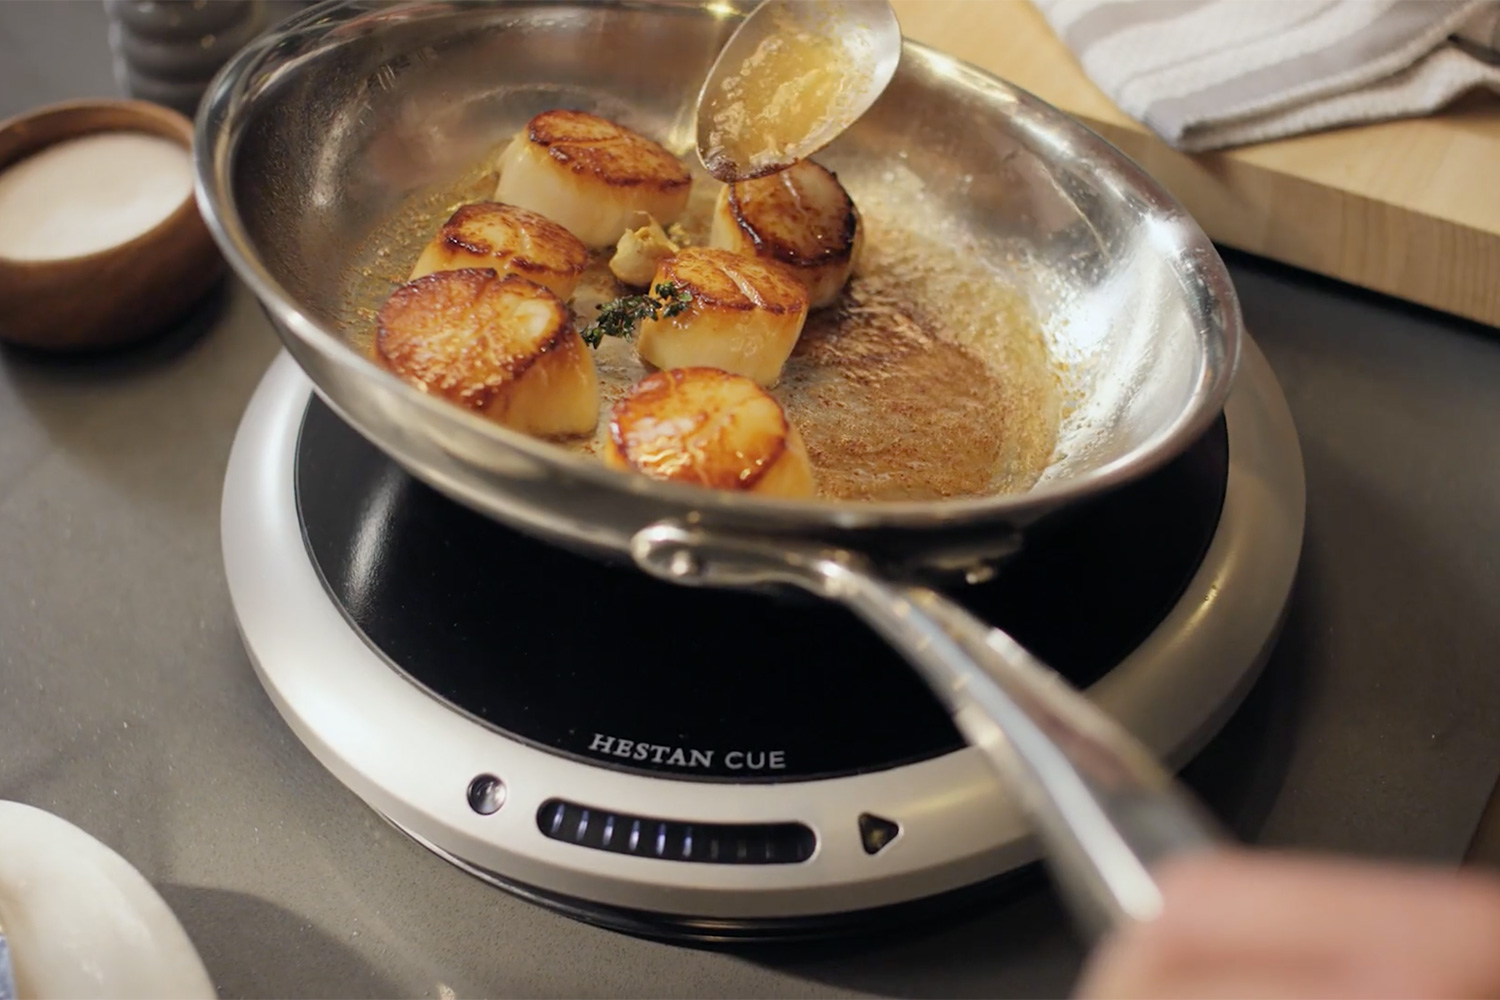 Hestan-SmartChef Collection - Precision Temperature 6-Piece Cookware System